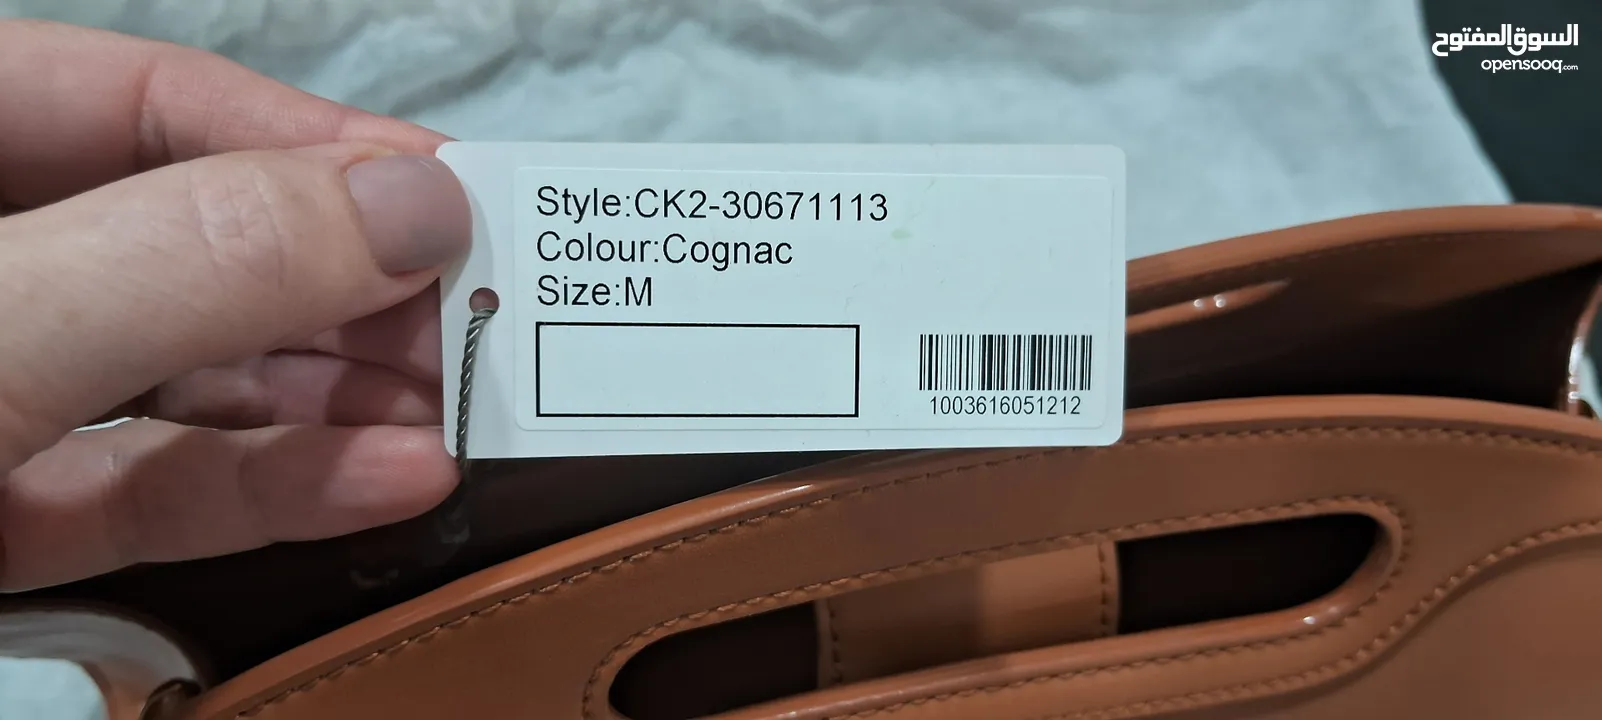 tags on new camel handbag unique with detachable strap